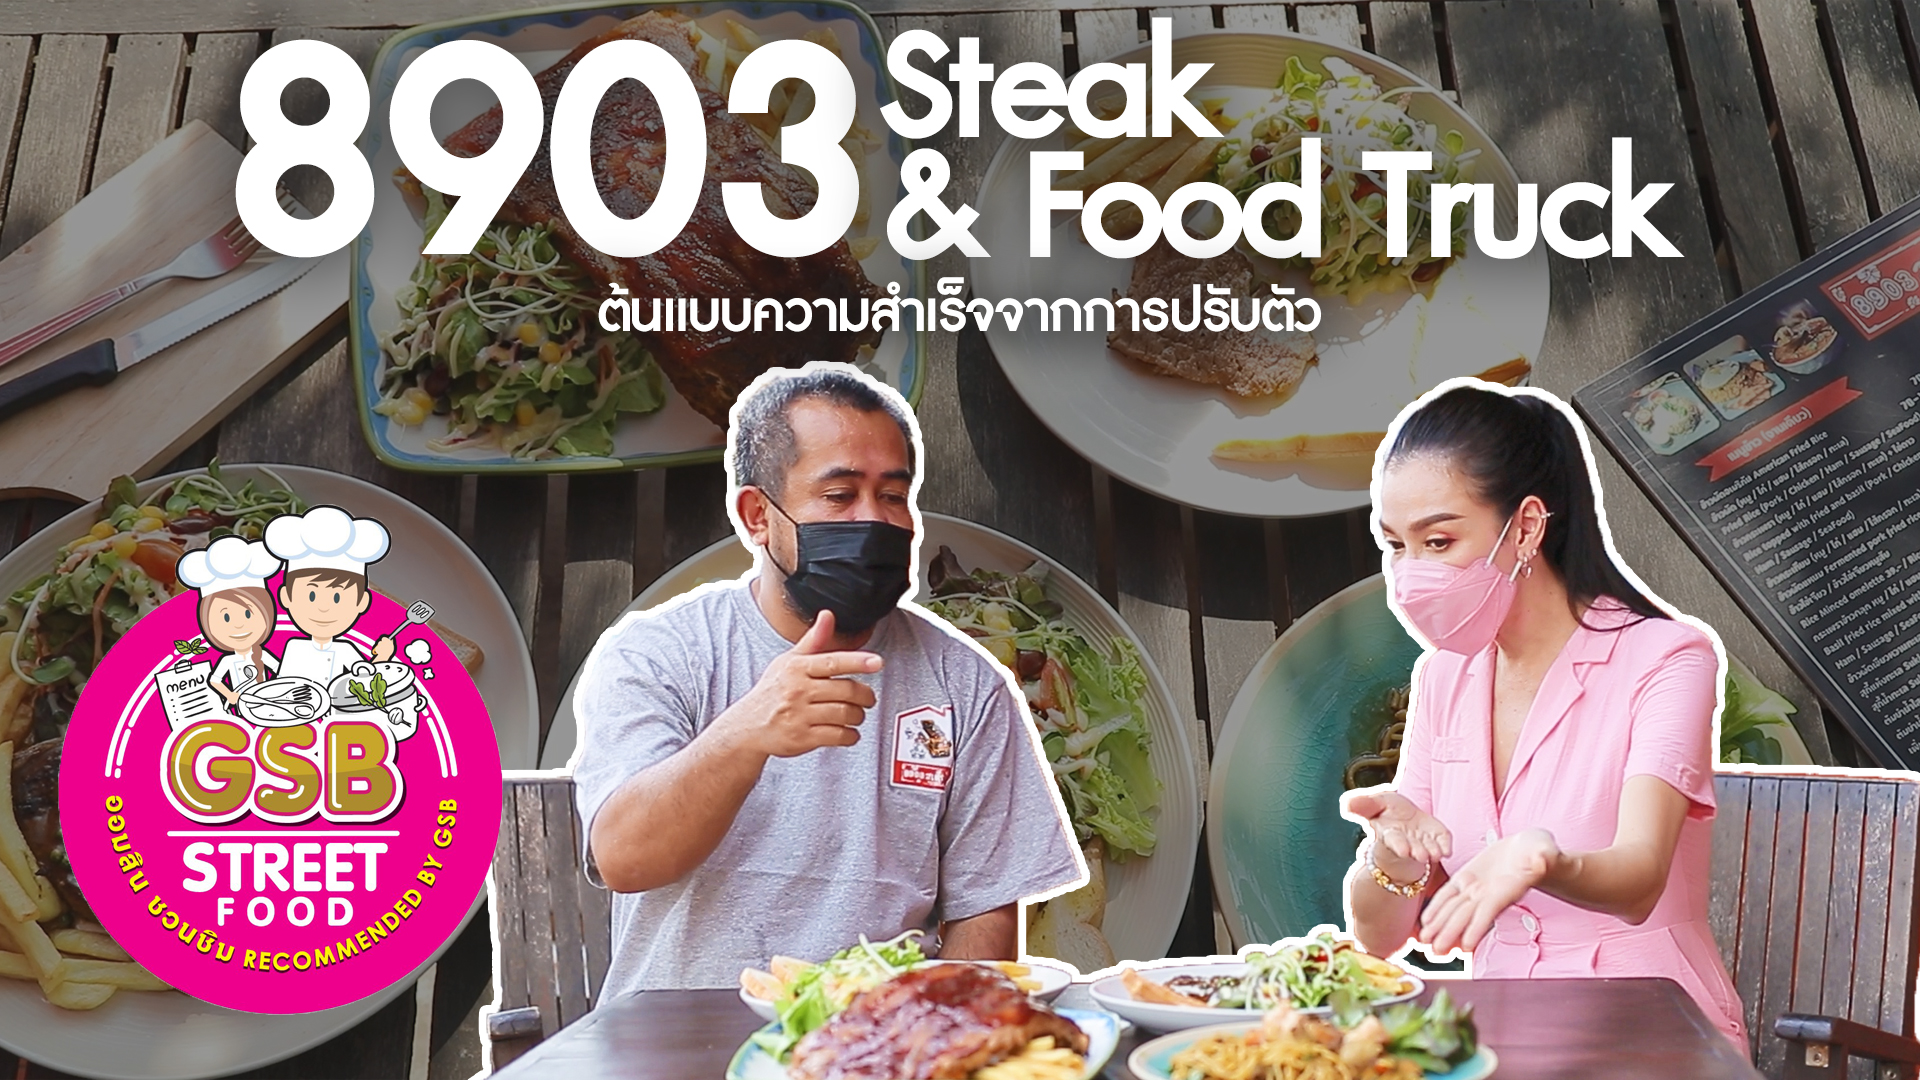 8903 Steak & Food Truck